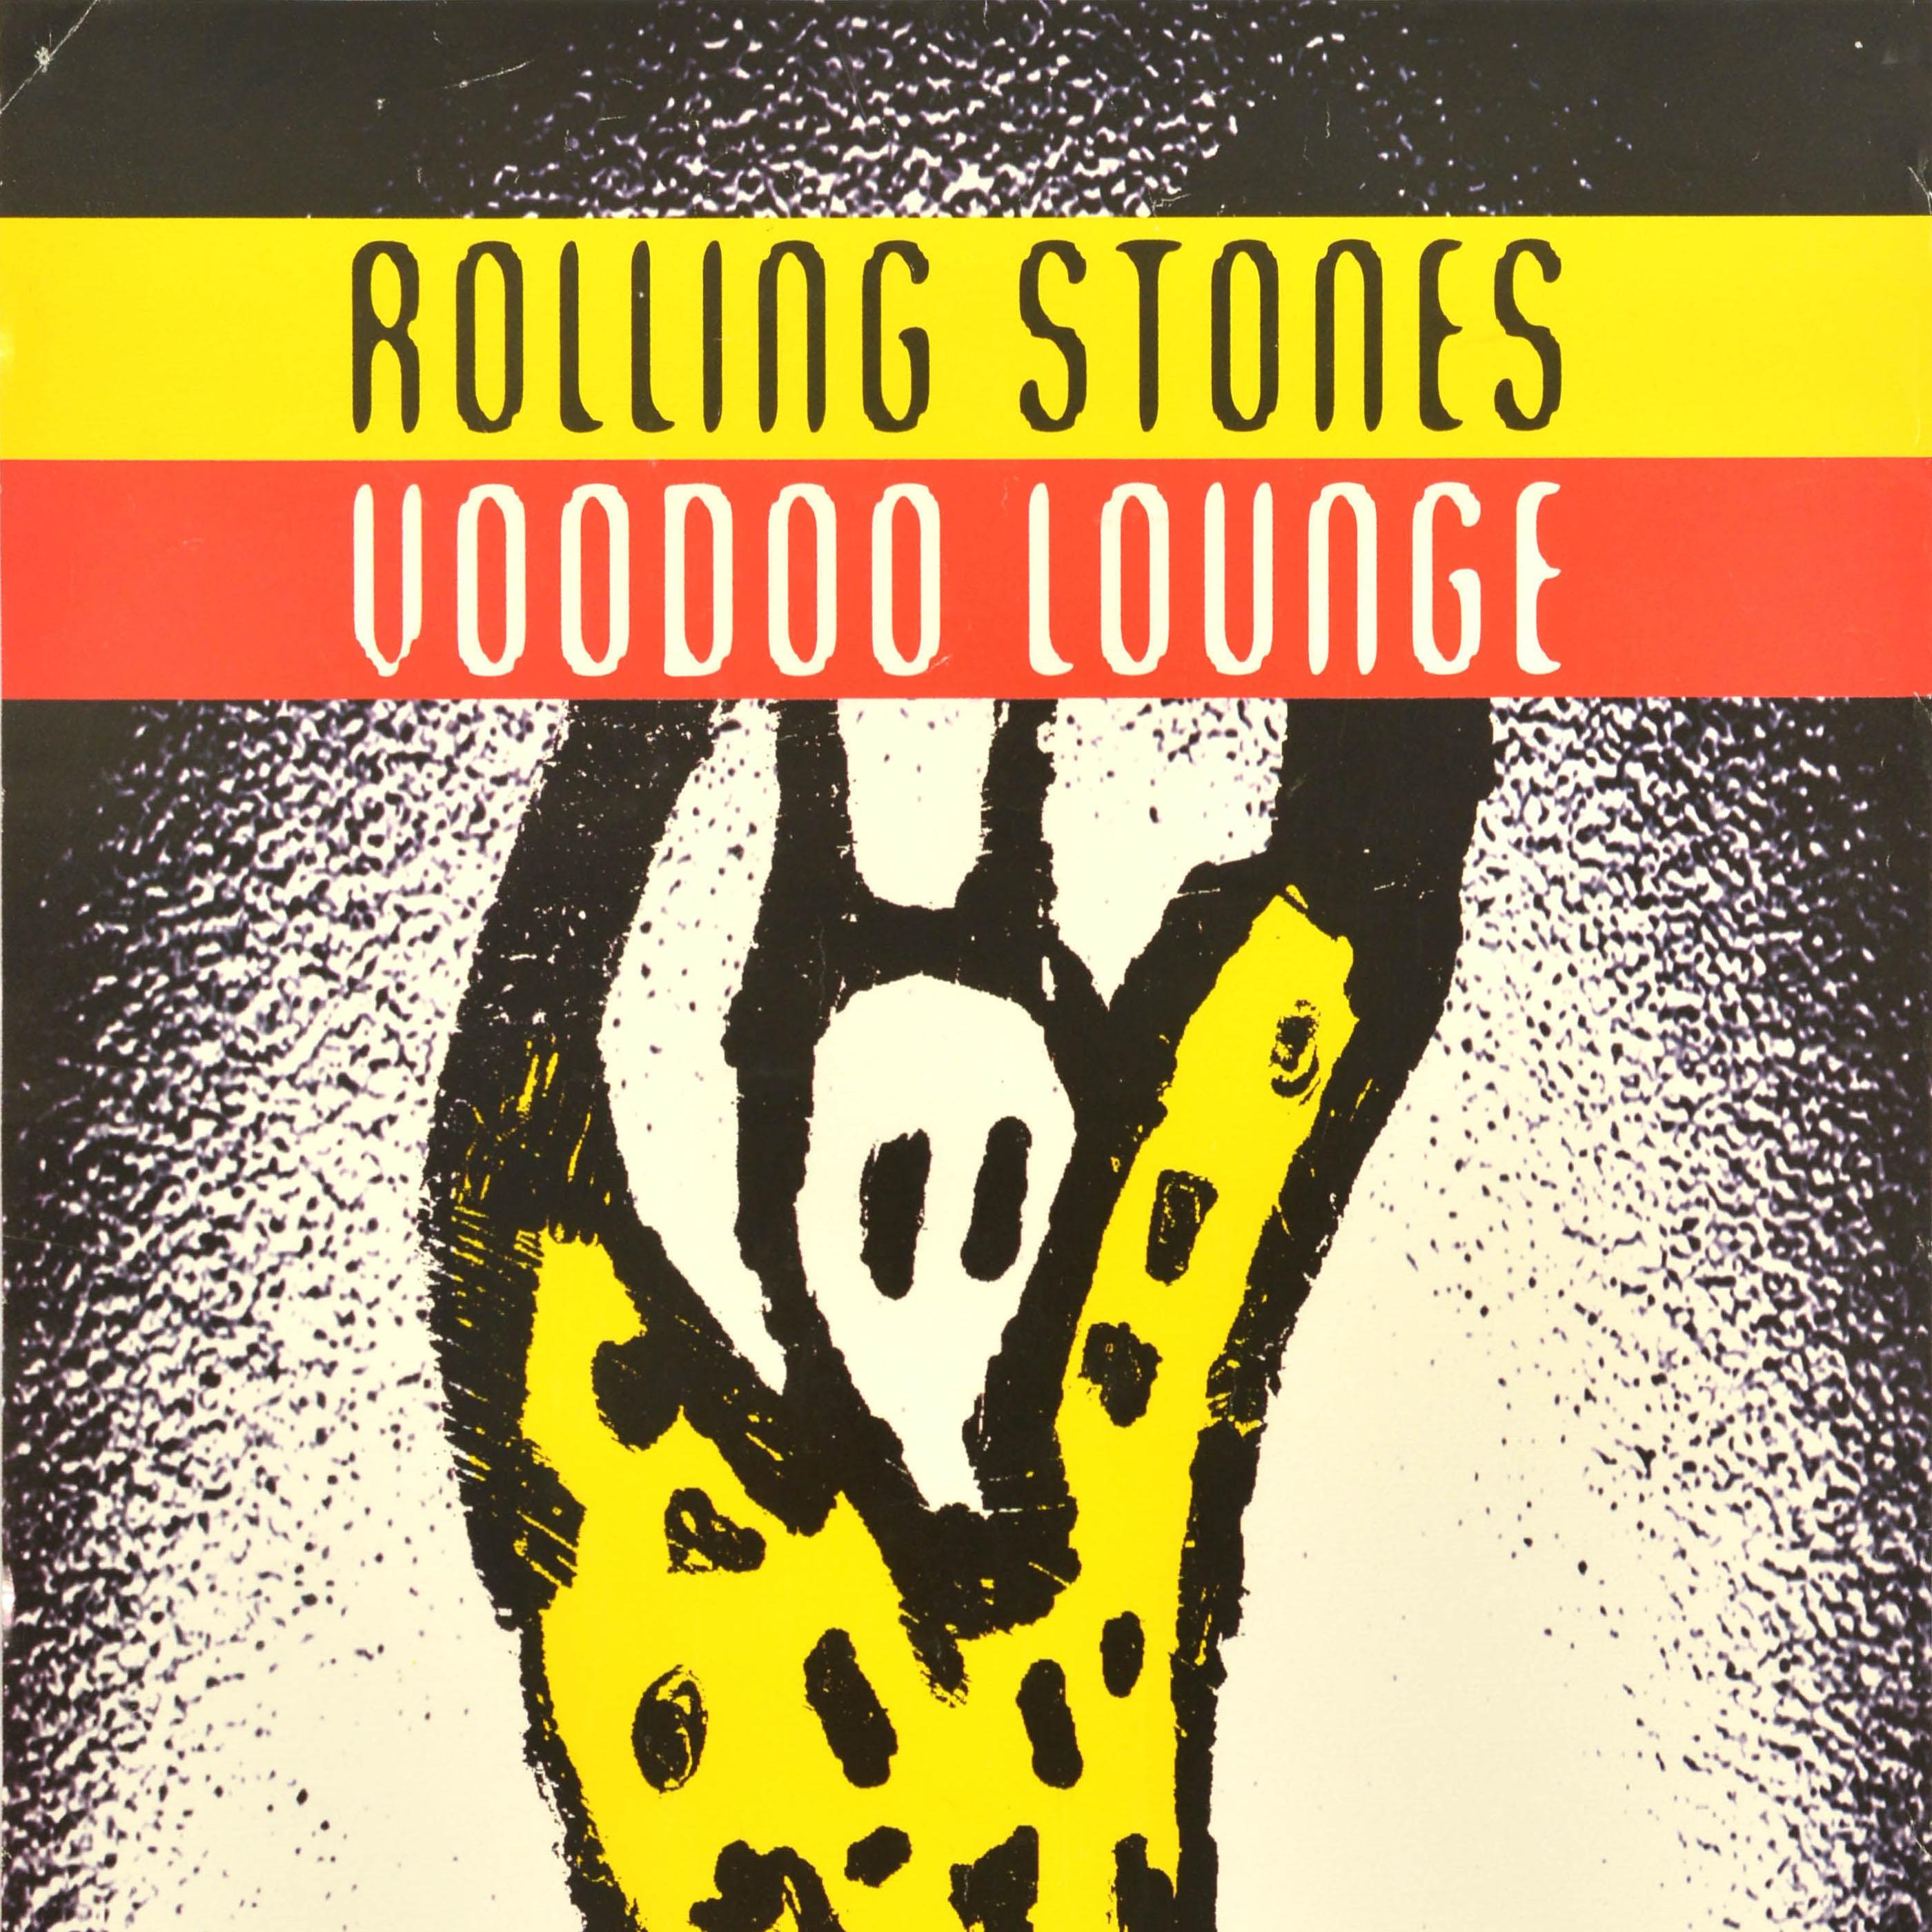 British Original Vintage Music Advertising Poster Rolling Stones Voodoo Lounge Album For Sale